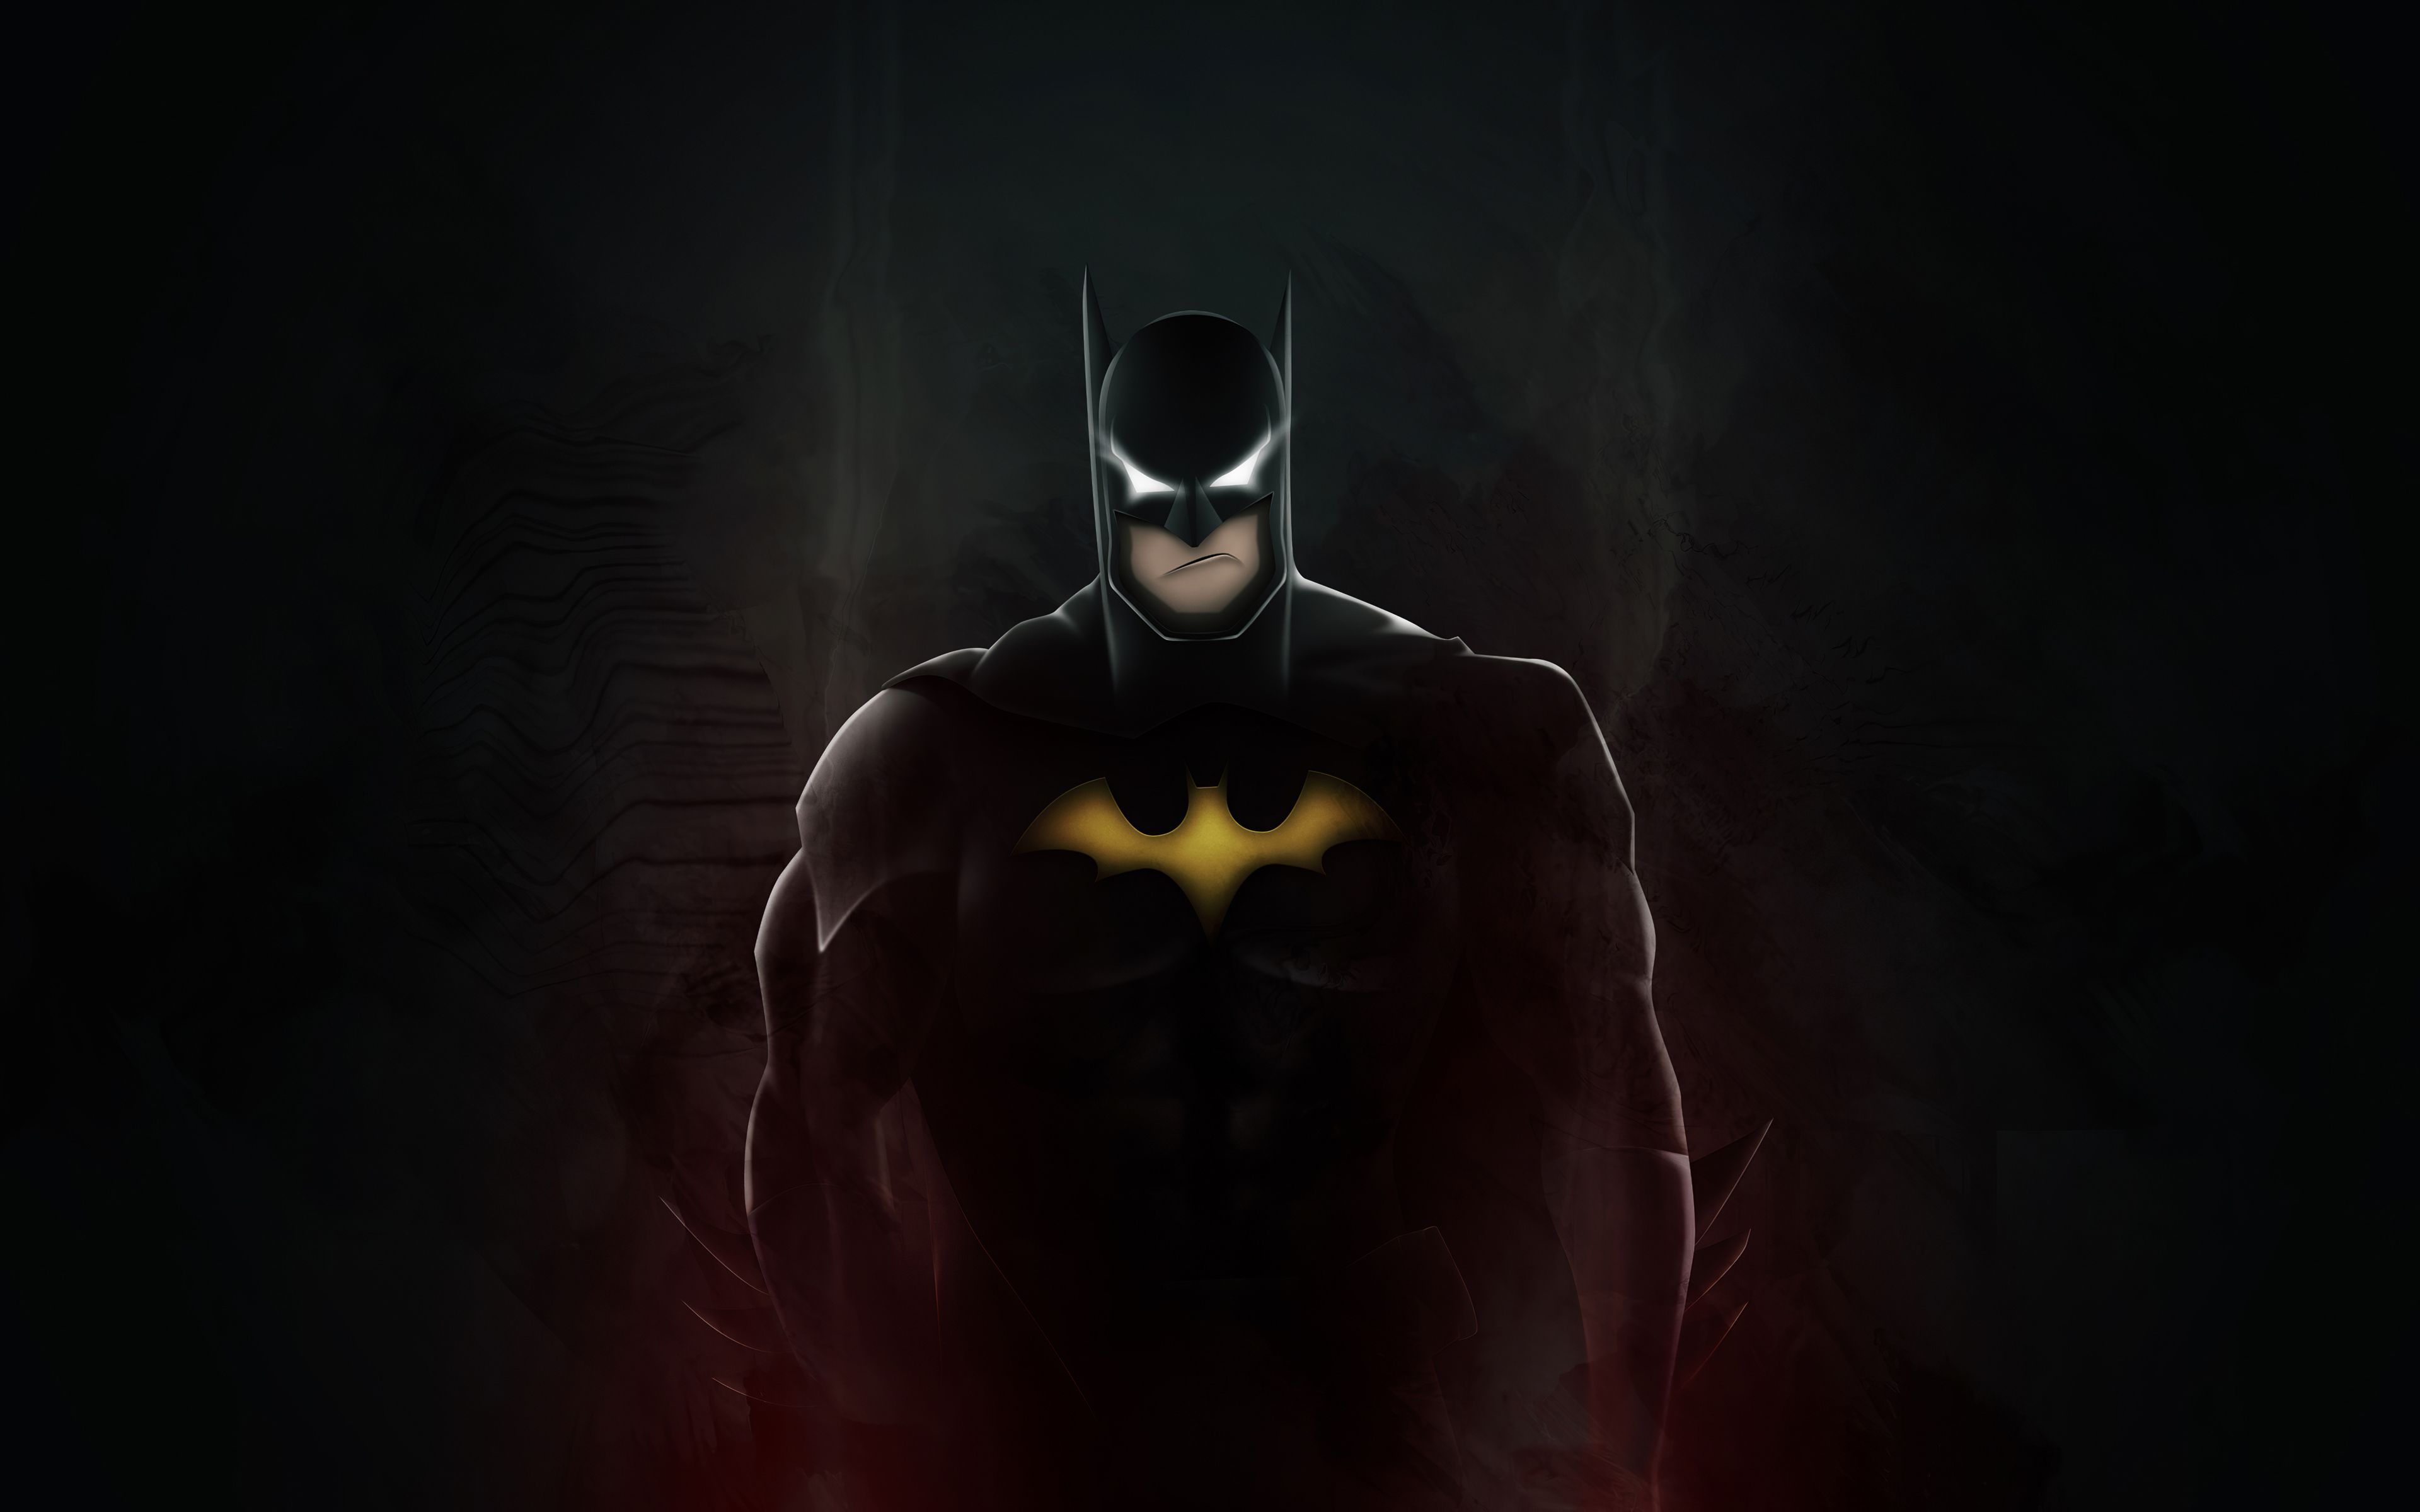 Angry 4k Batman Wallpaper, HD Superheroes 4K Wallpaper, Image, Photo and Background